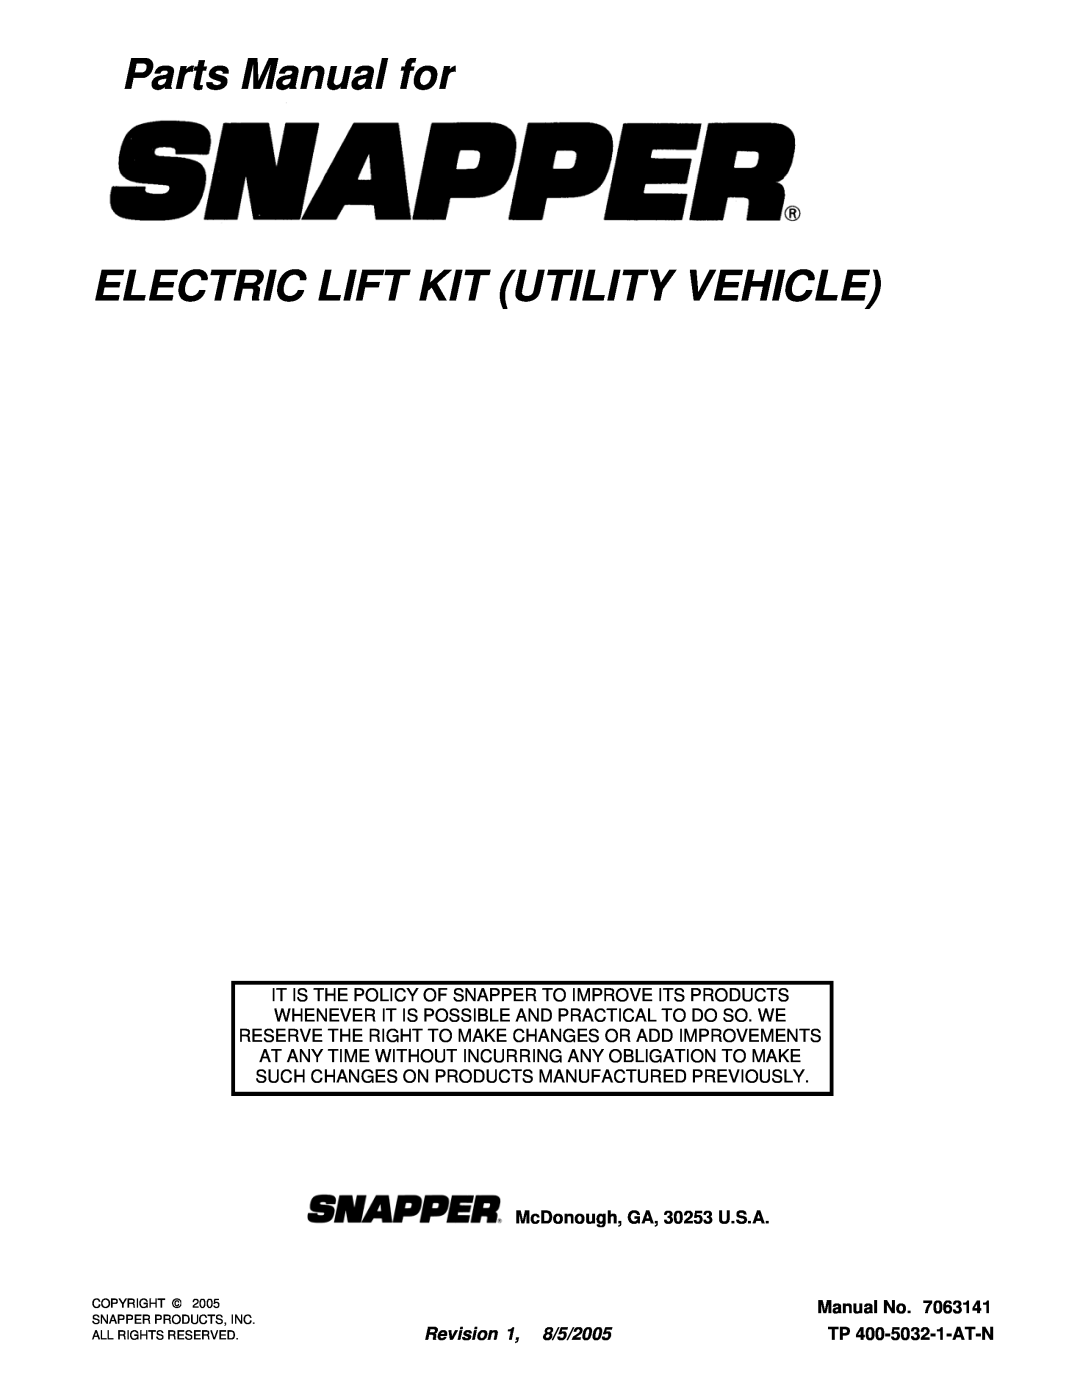 Snapper 7063141 manual Electric Lift Kit Utility Vehicle, Parts Manual for, McDonough, GA, 30253 U.S.A, Manual No 